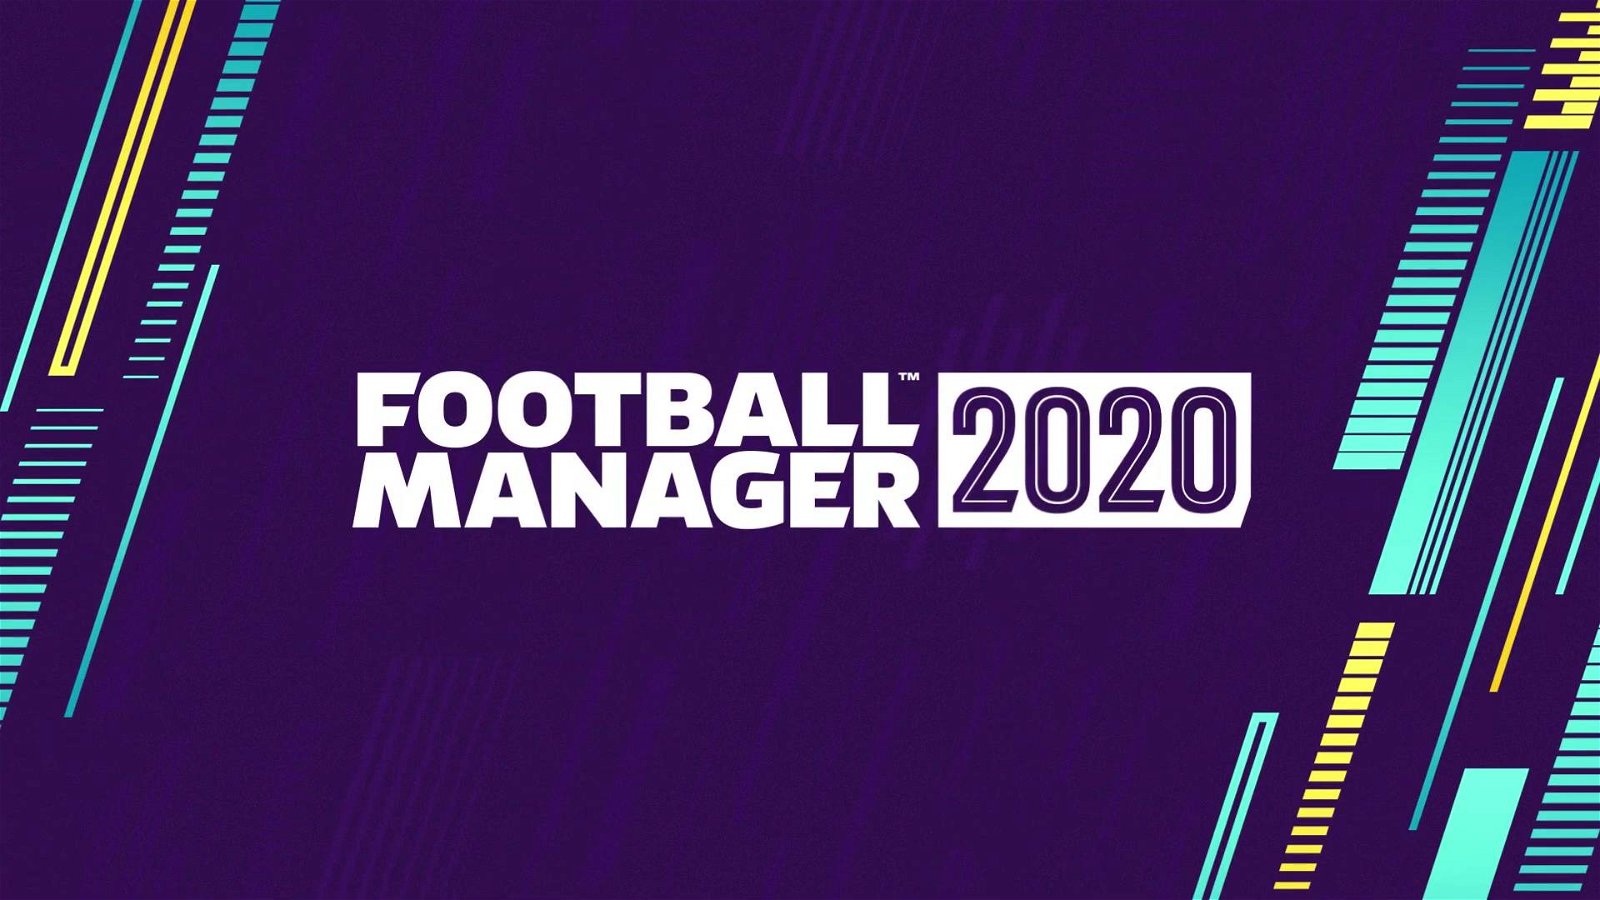 Immagine di Football Manager 2020 è in prova gratuita per una settimana!